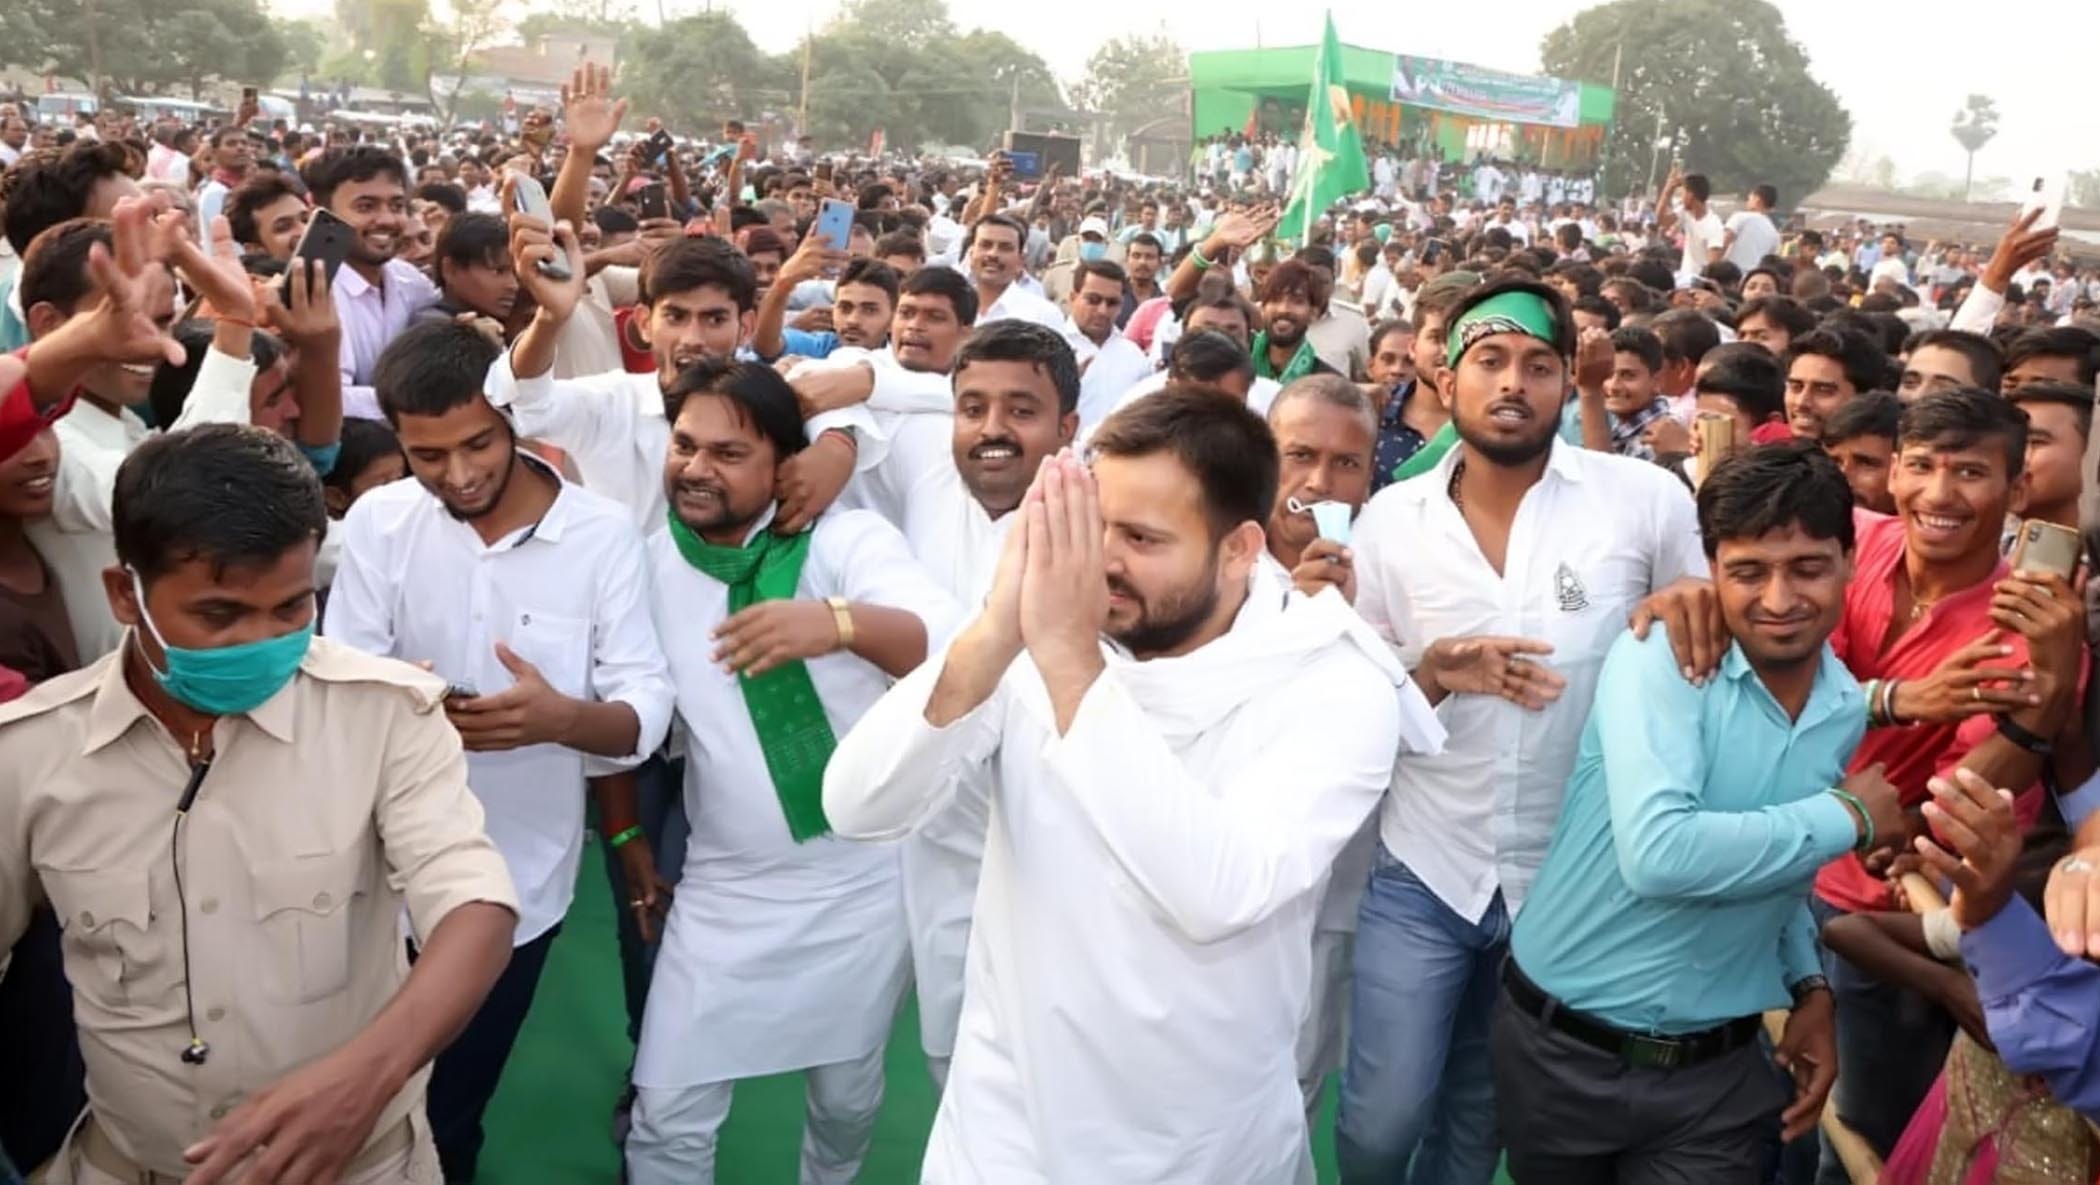 Bihar election rally India October 2020